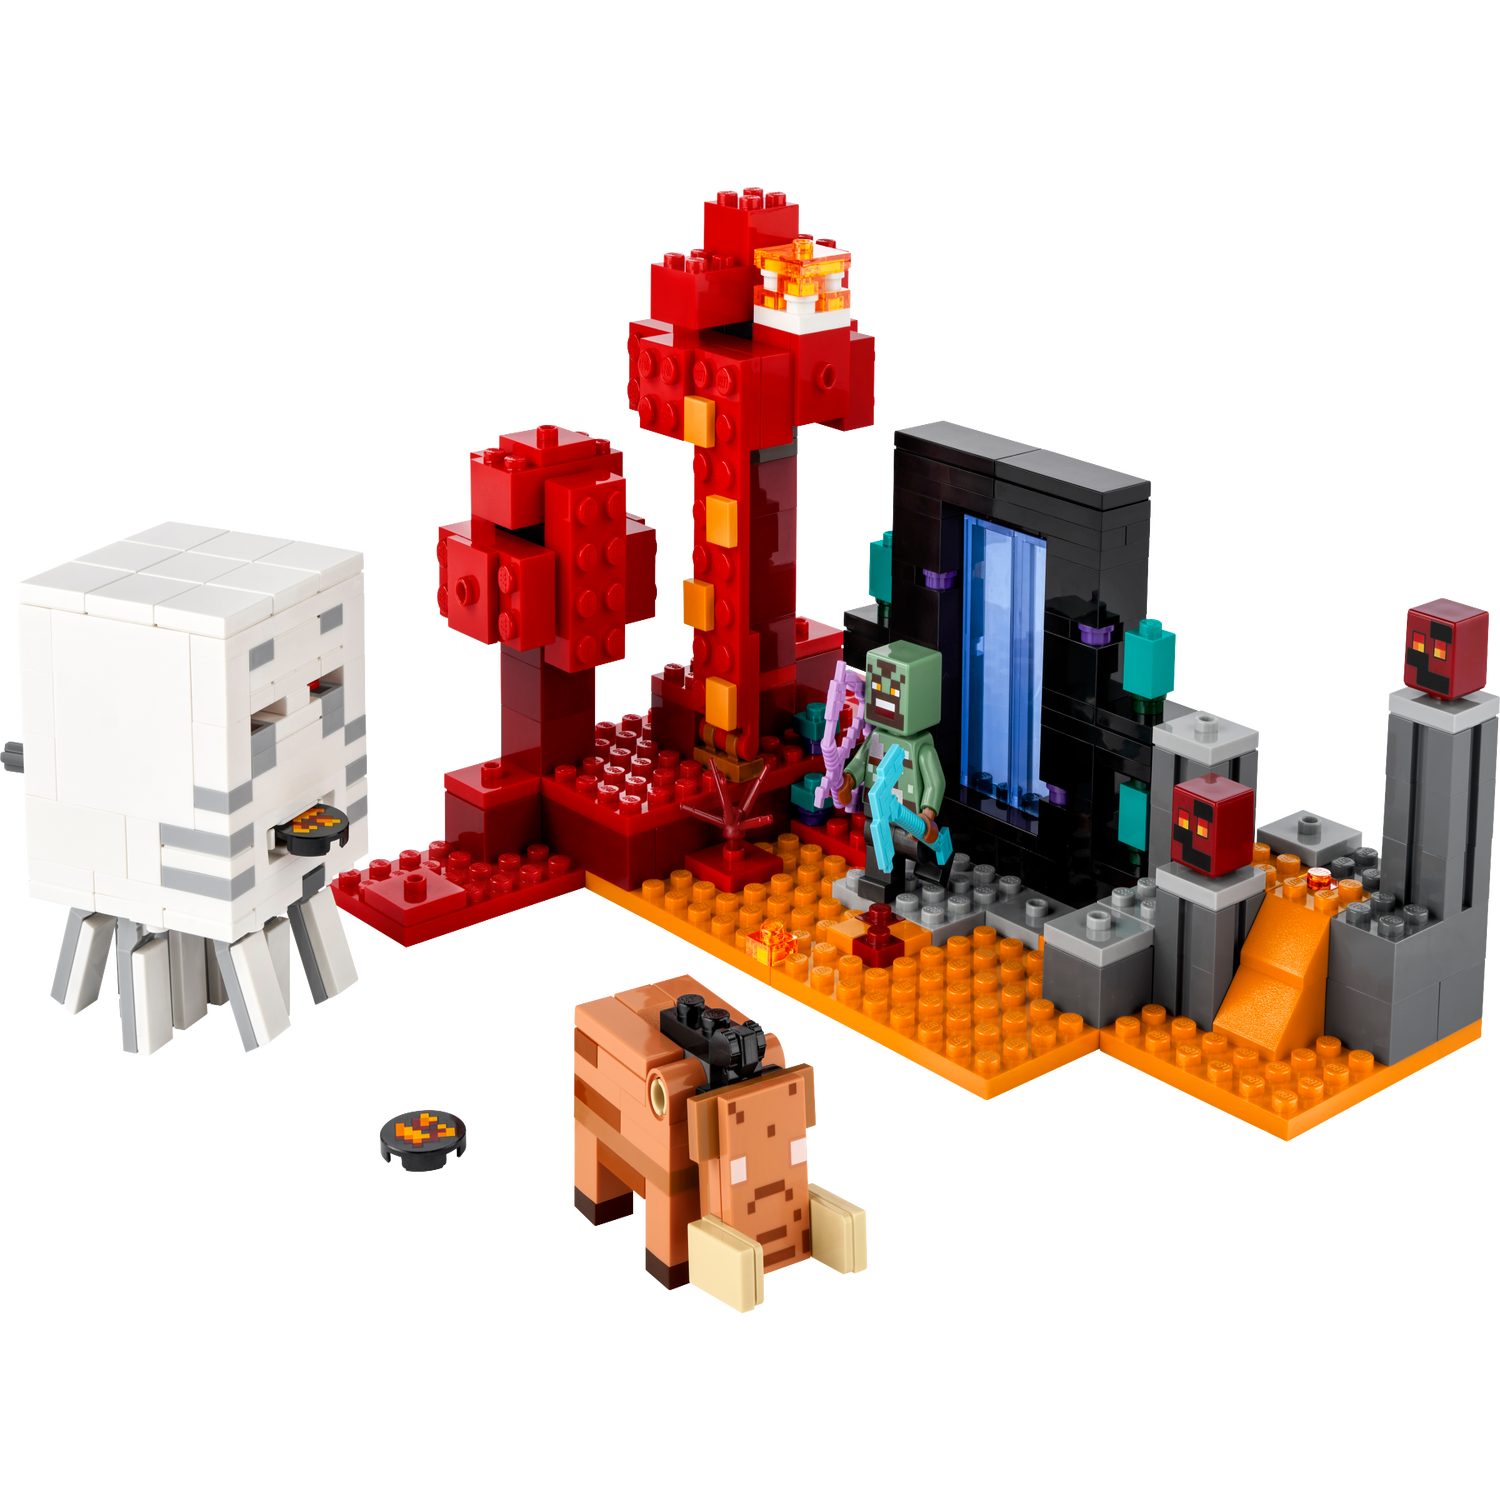 LEGO Minecraft The Nether Portal Ambush Building Toy 21255 6470596